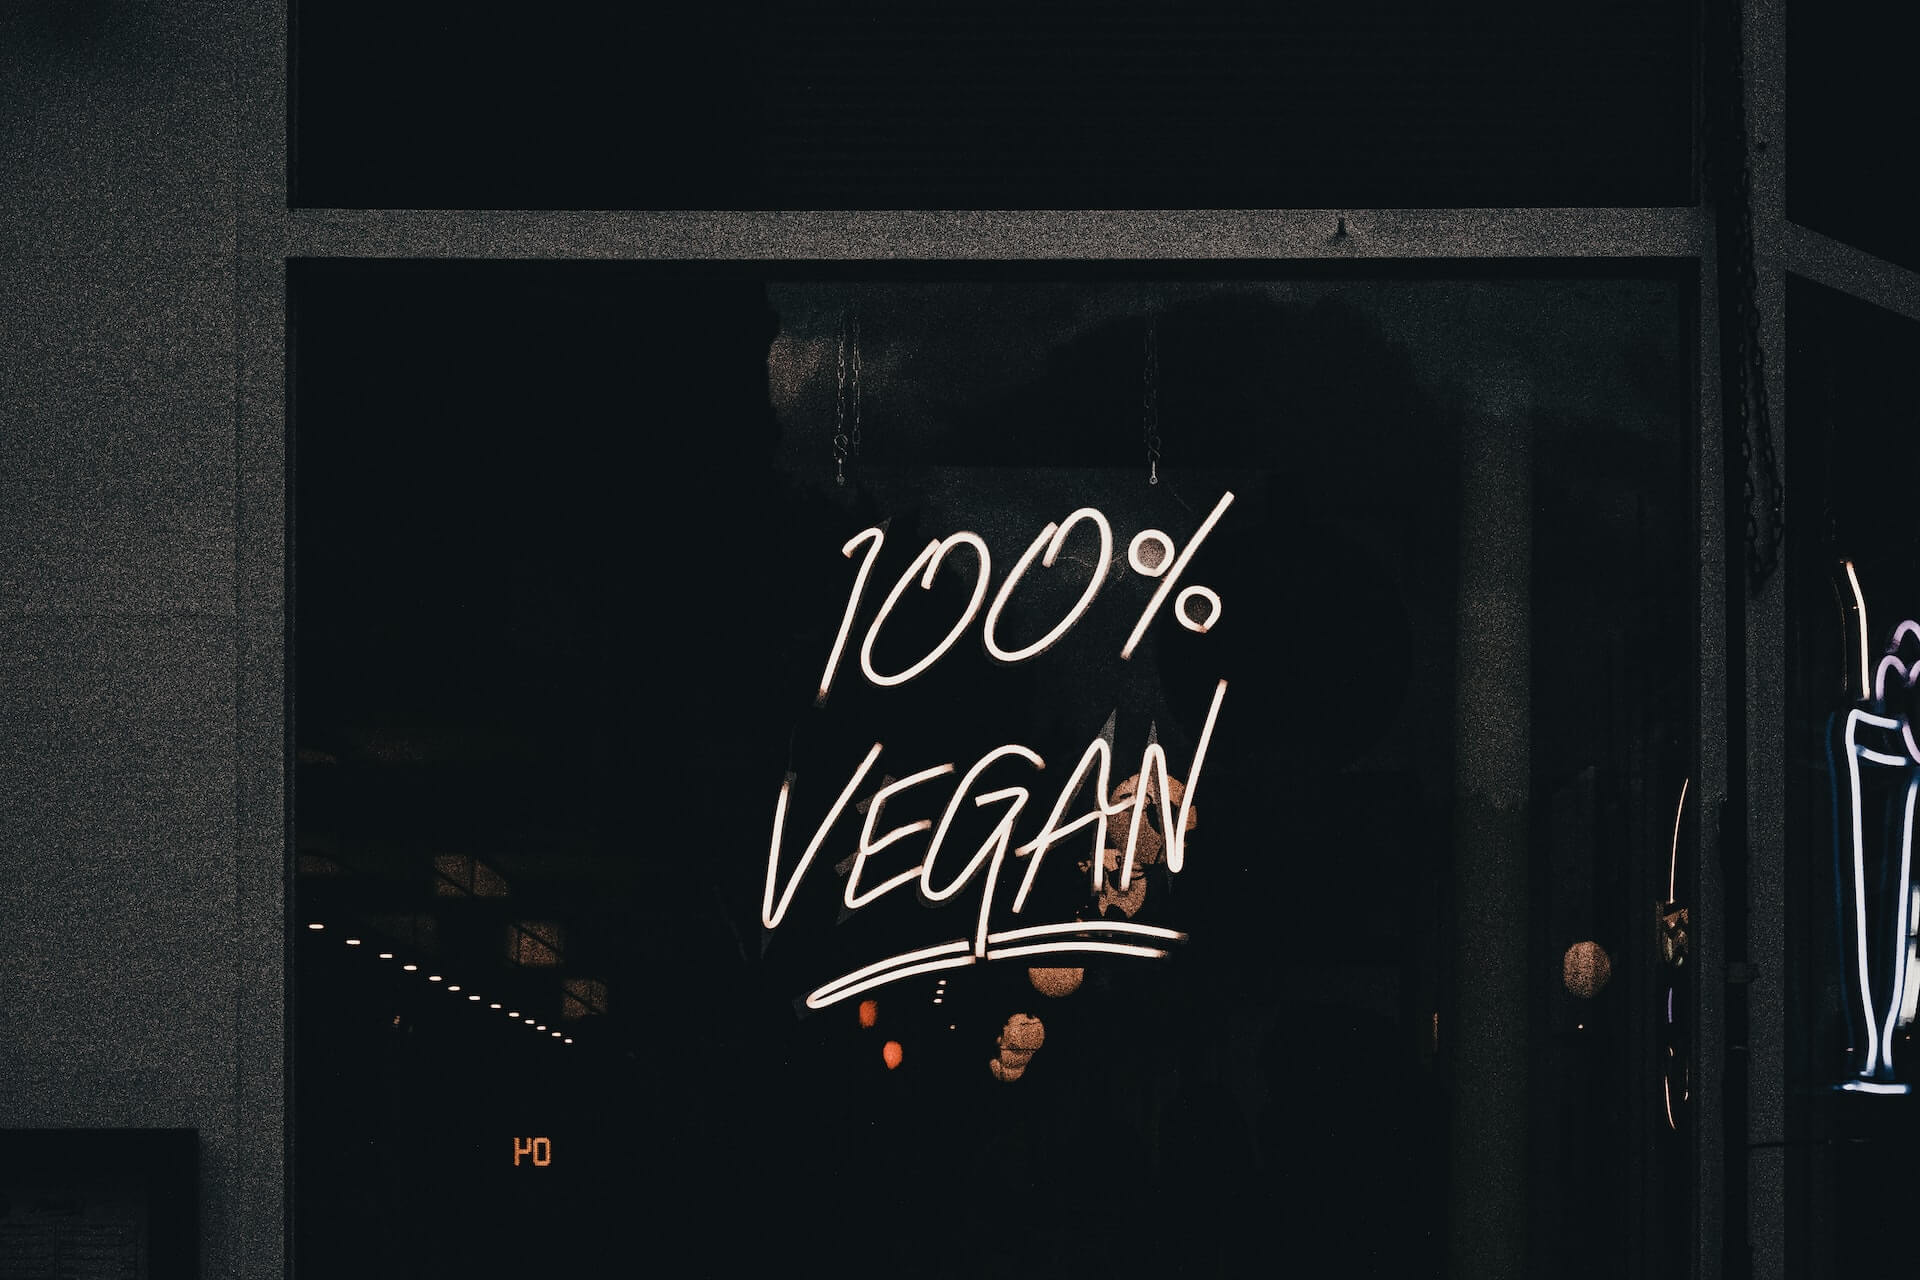 A neon sign reads "100% Vegan"